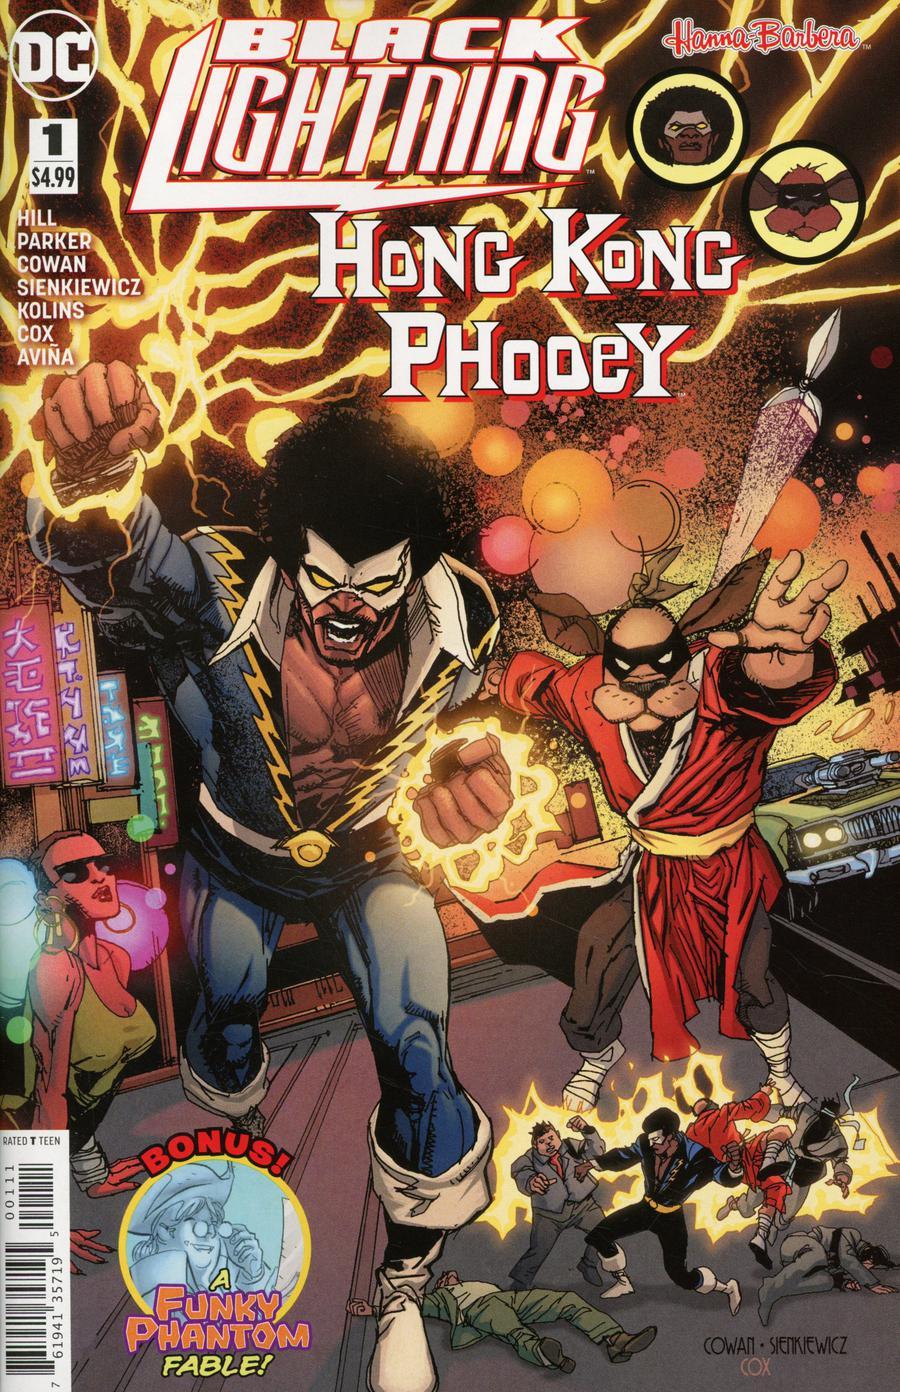 Black Lightning Hong Kong Phooey Special Vol. 1 #1